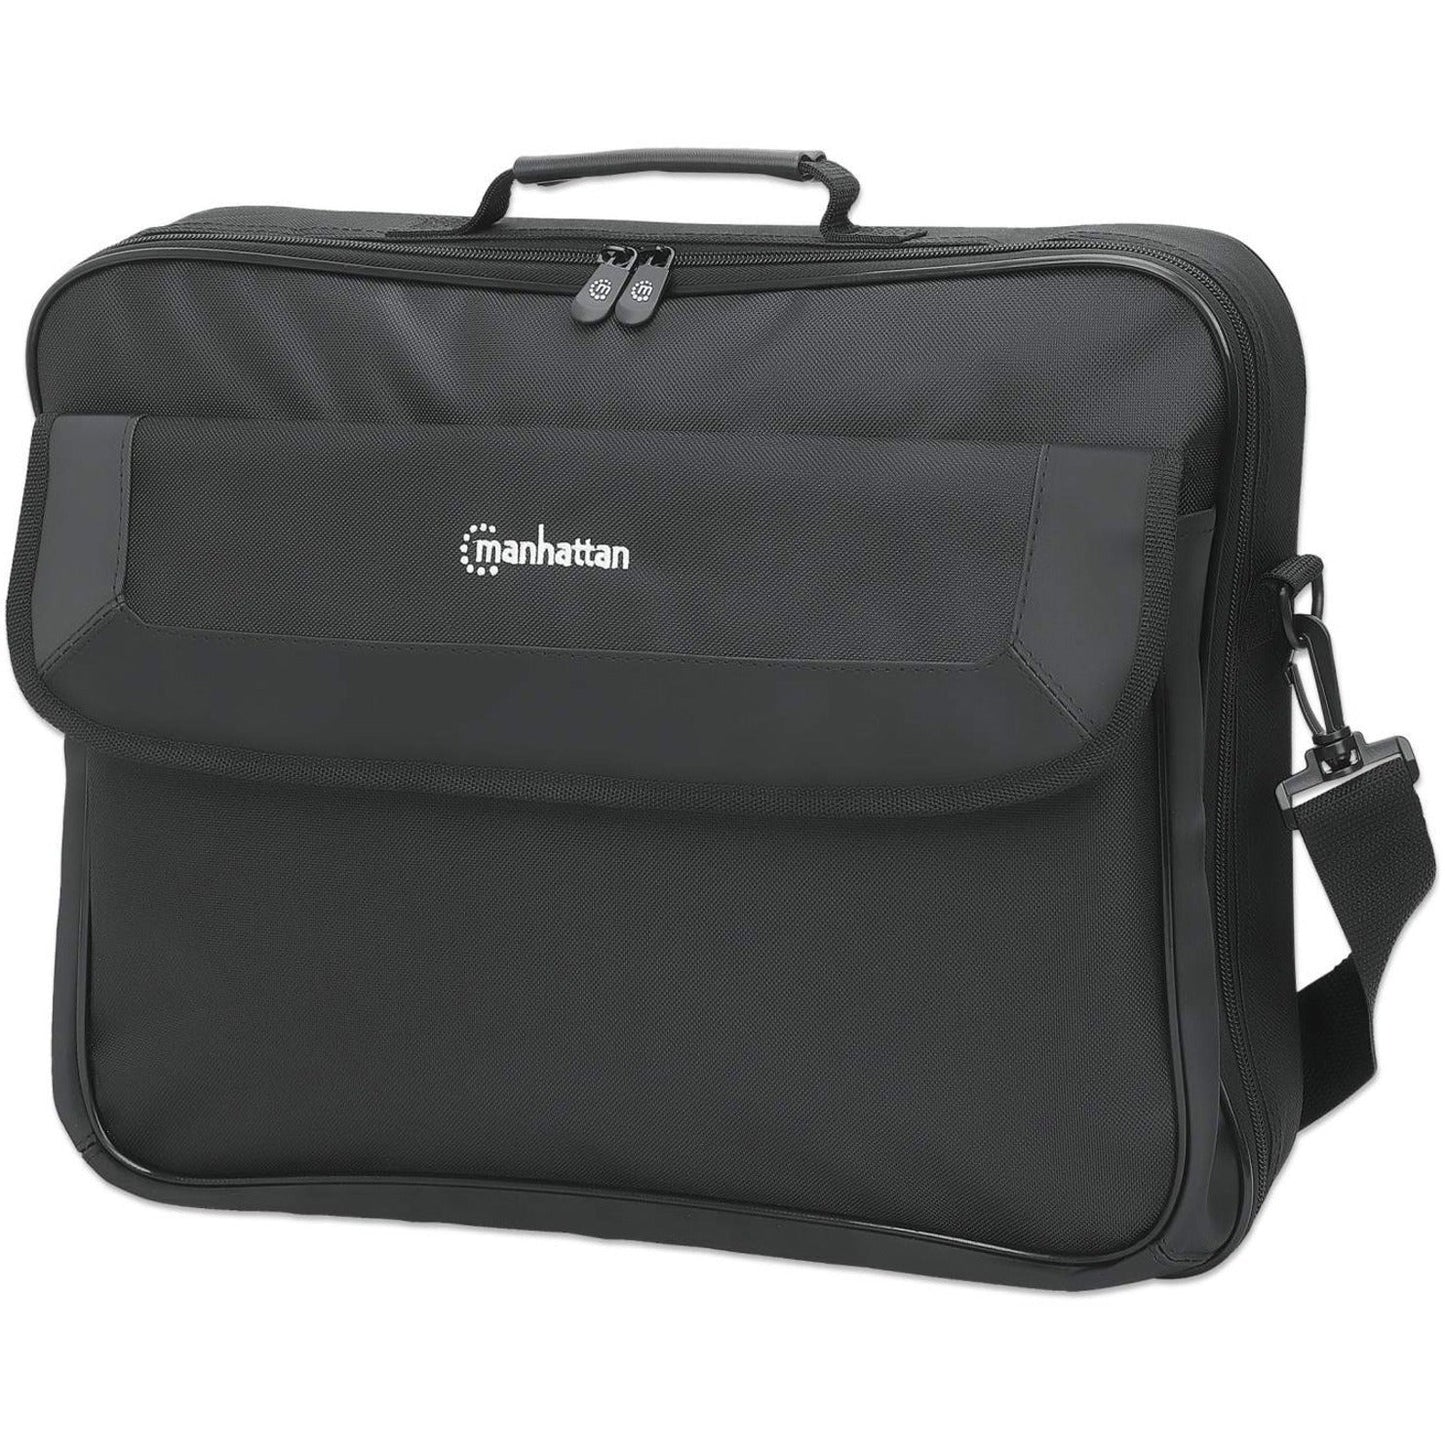 Manhattan Cambridge Carrying Case (Briefcase) for 17.3" Notebook Ultrabook MacBook Accessories - Black